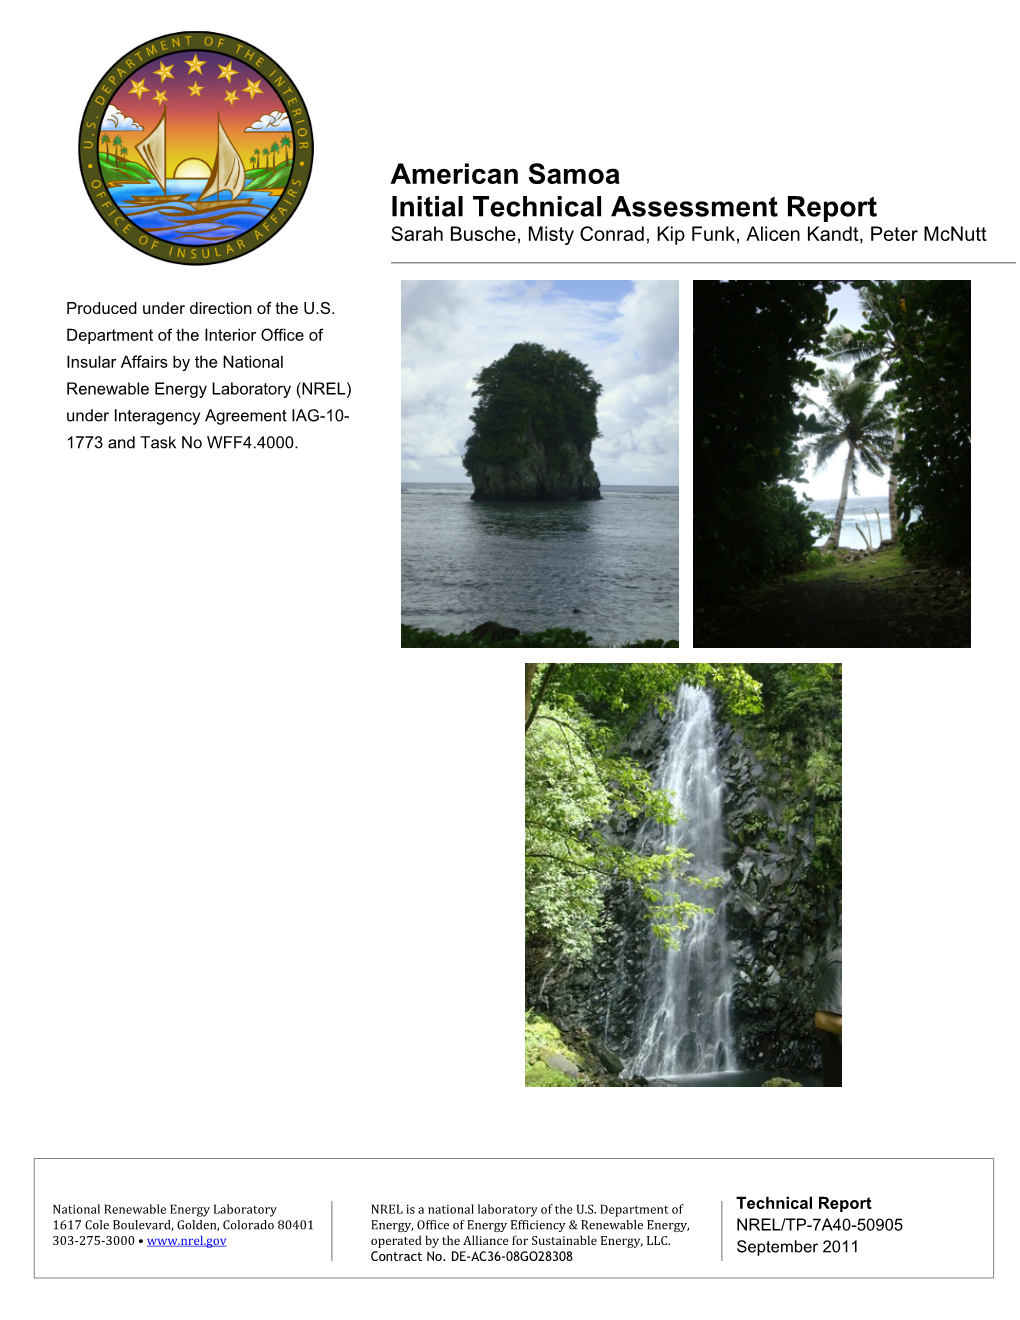 American Samoa Initial Technical Assessment Report Sarah Busche, Misty Conrad, Kip Funk, Alicen Kandt, Peter Mcnutt